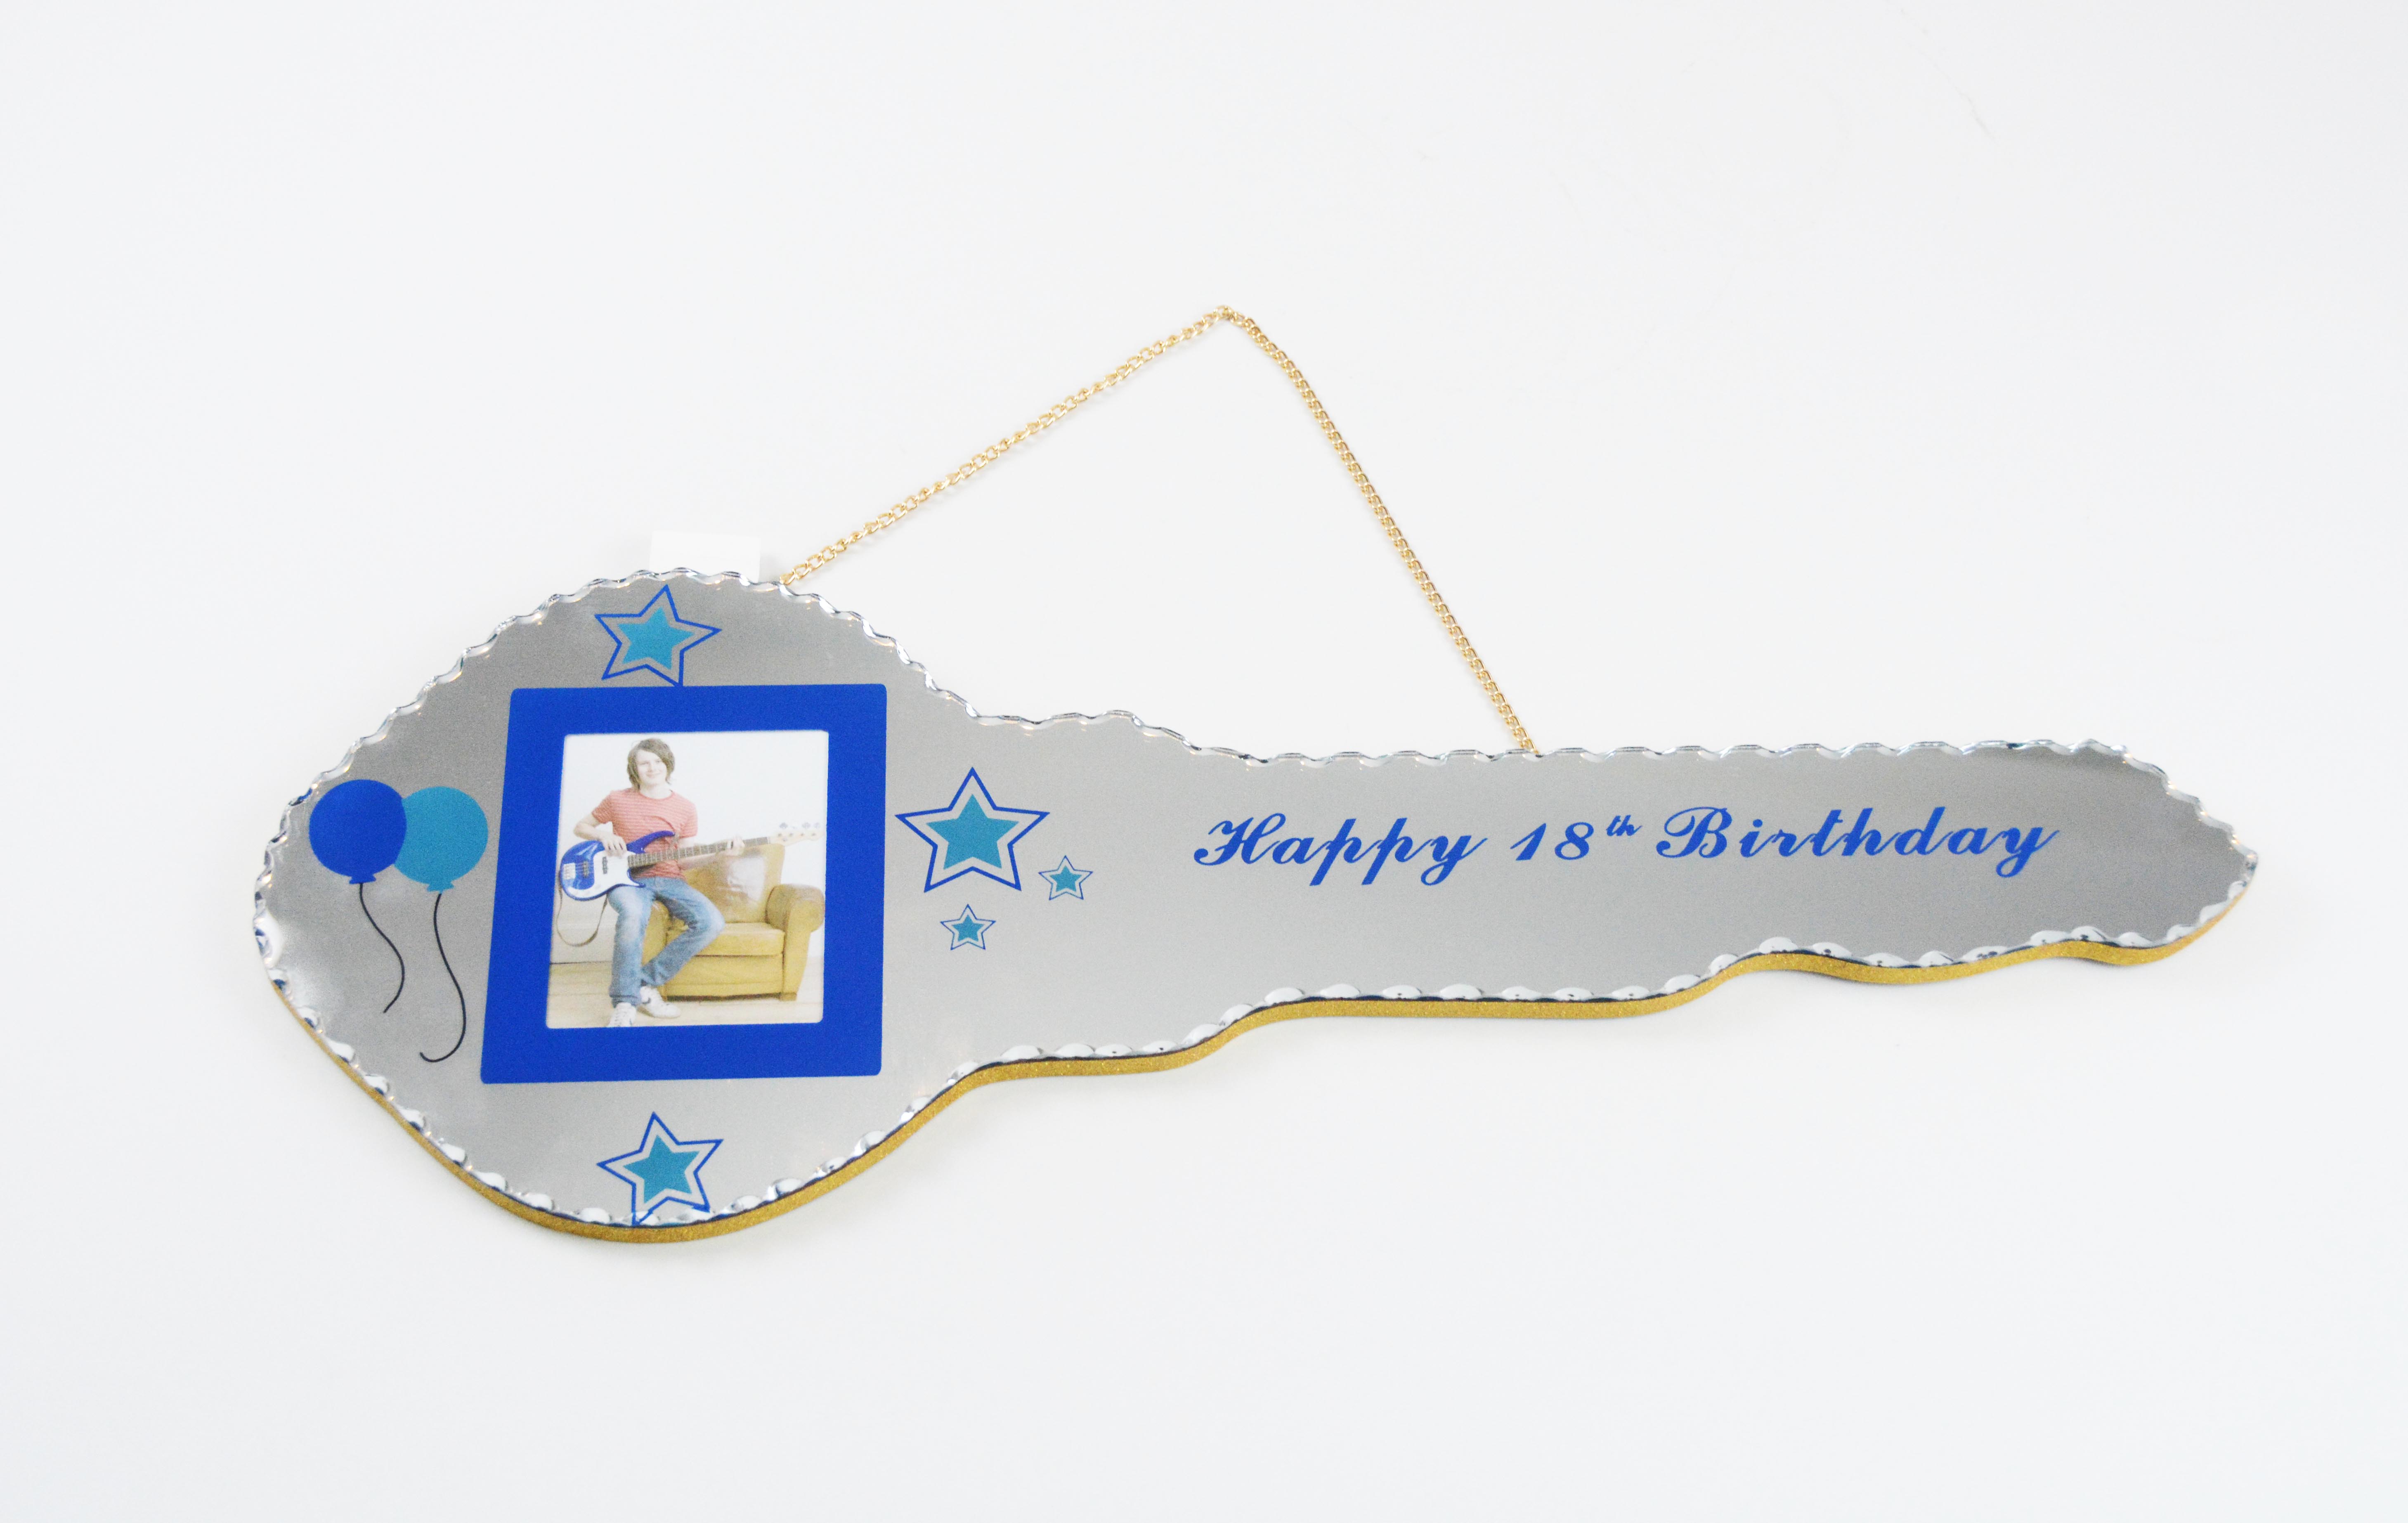 Happy 18th birthday 4x6" glass wooden photo frame silk screen font gold powder circled edges in key shape design for boys